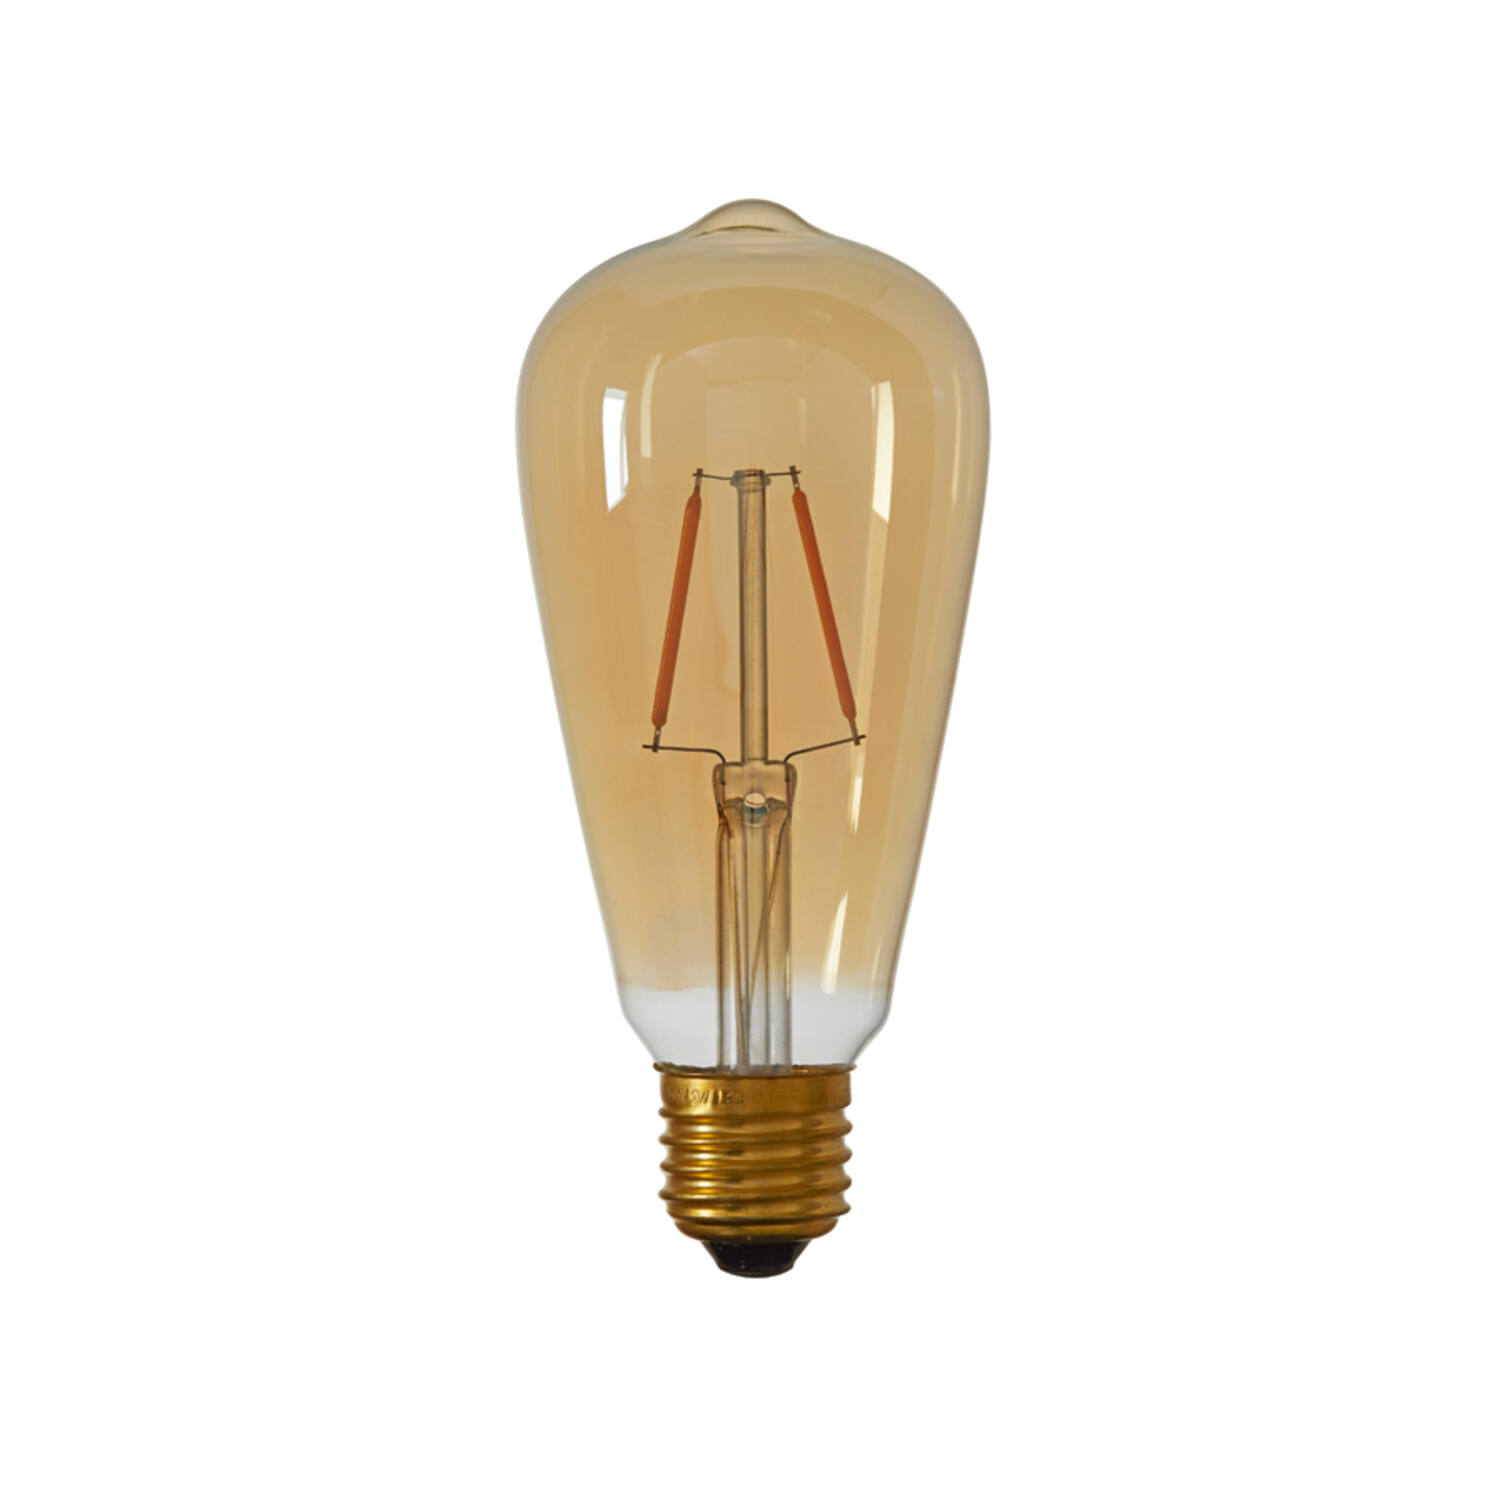 LED angular Ø6,5x14,5 cm LIGHT 2W amber E27 dimmable